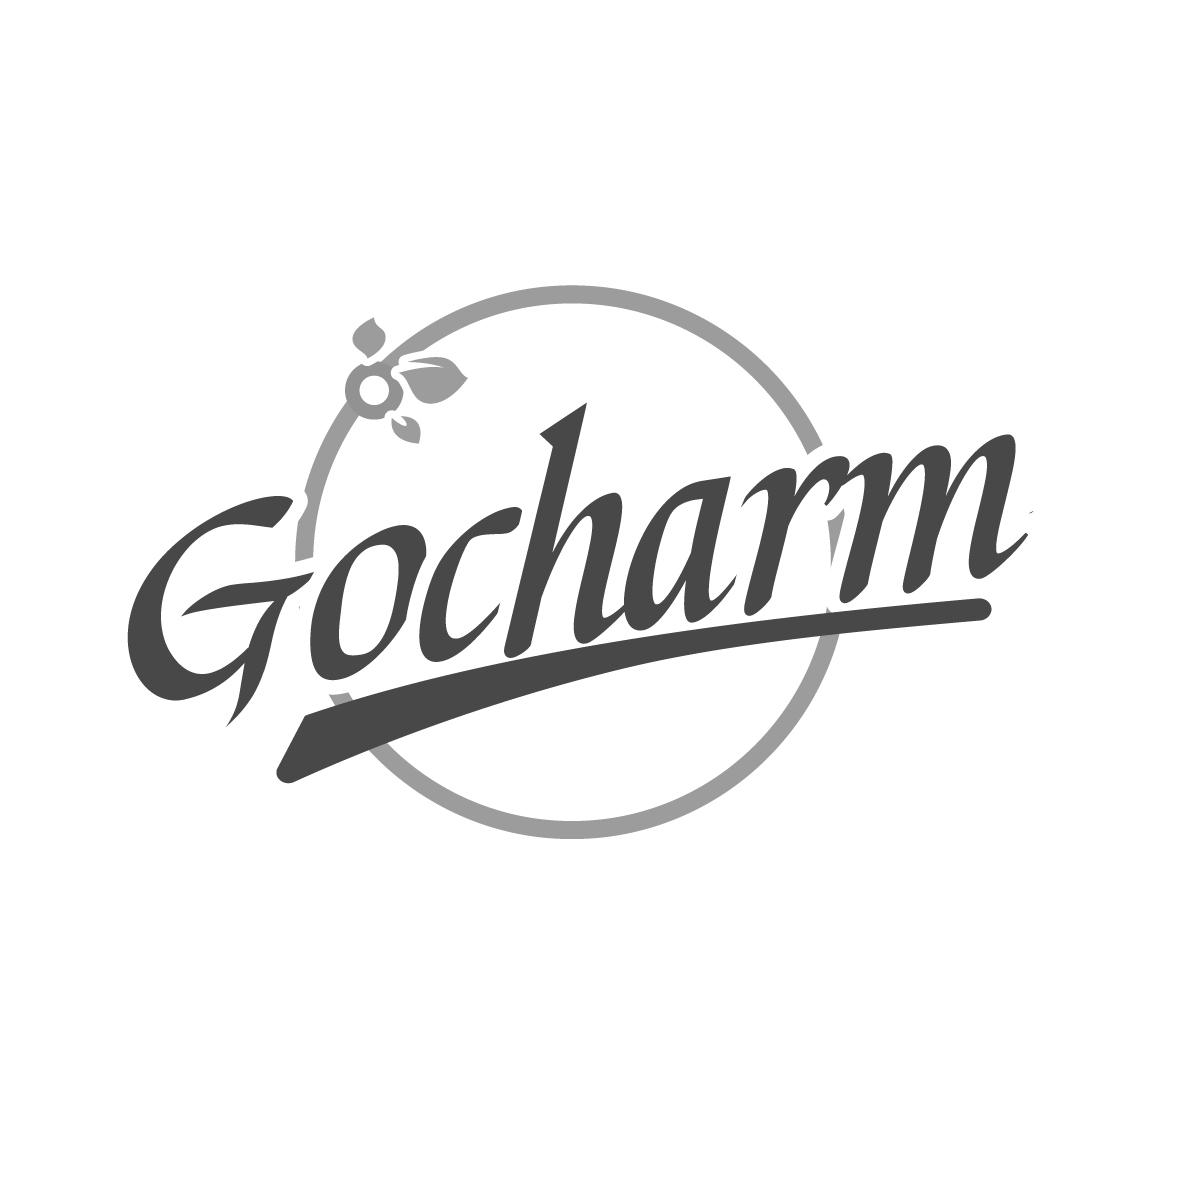 GOCHARM